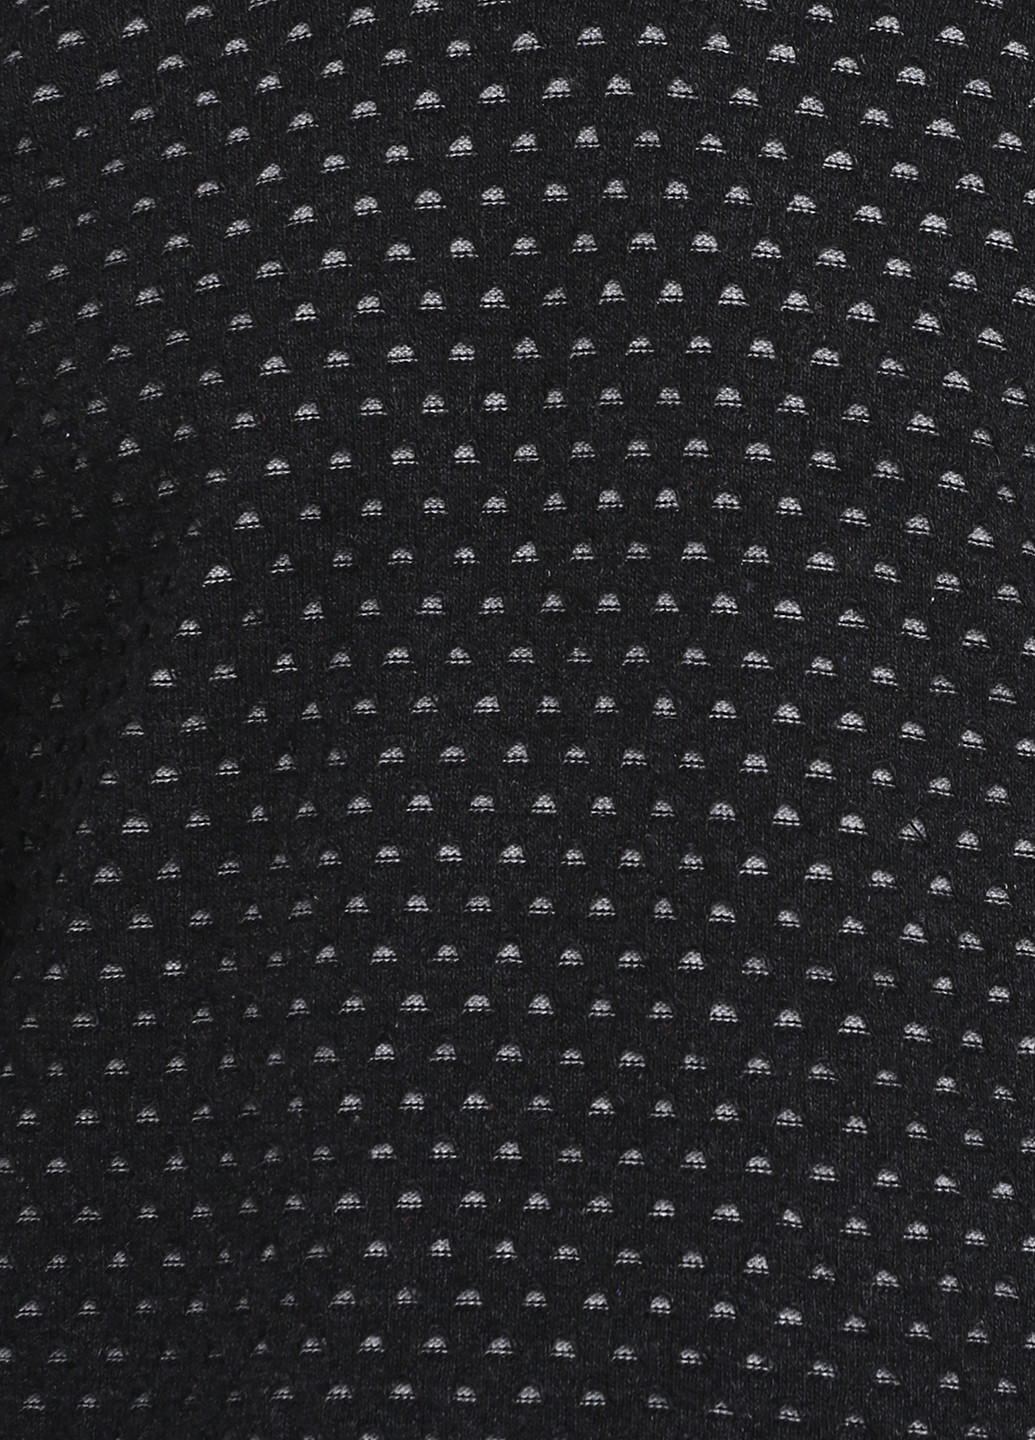 Темно-серый демисезонный пуловер пуловер Enbiya